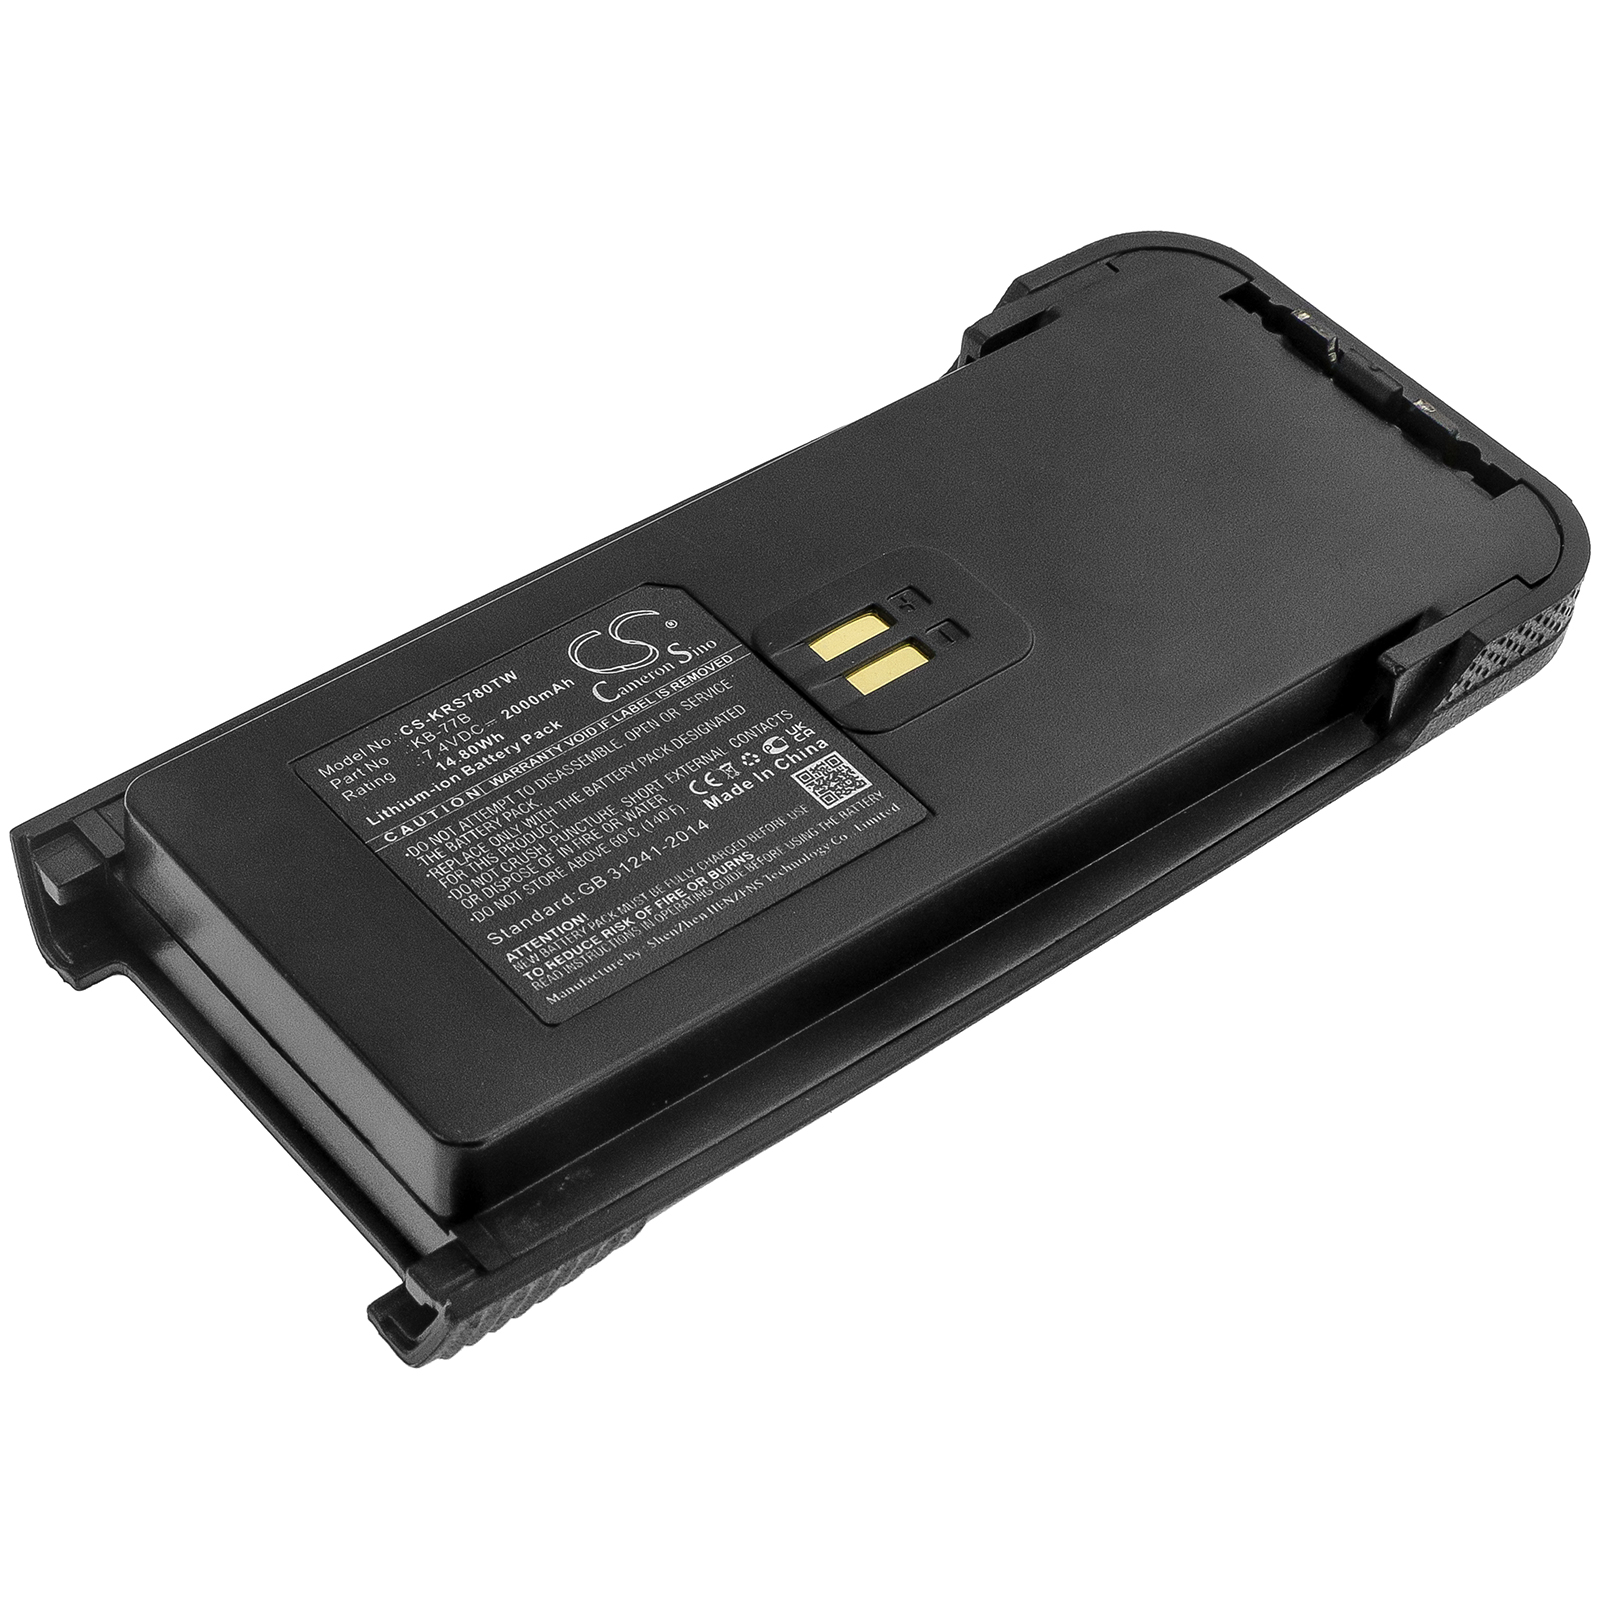 Kirisun DP780 Compatible Replacement Battery